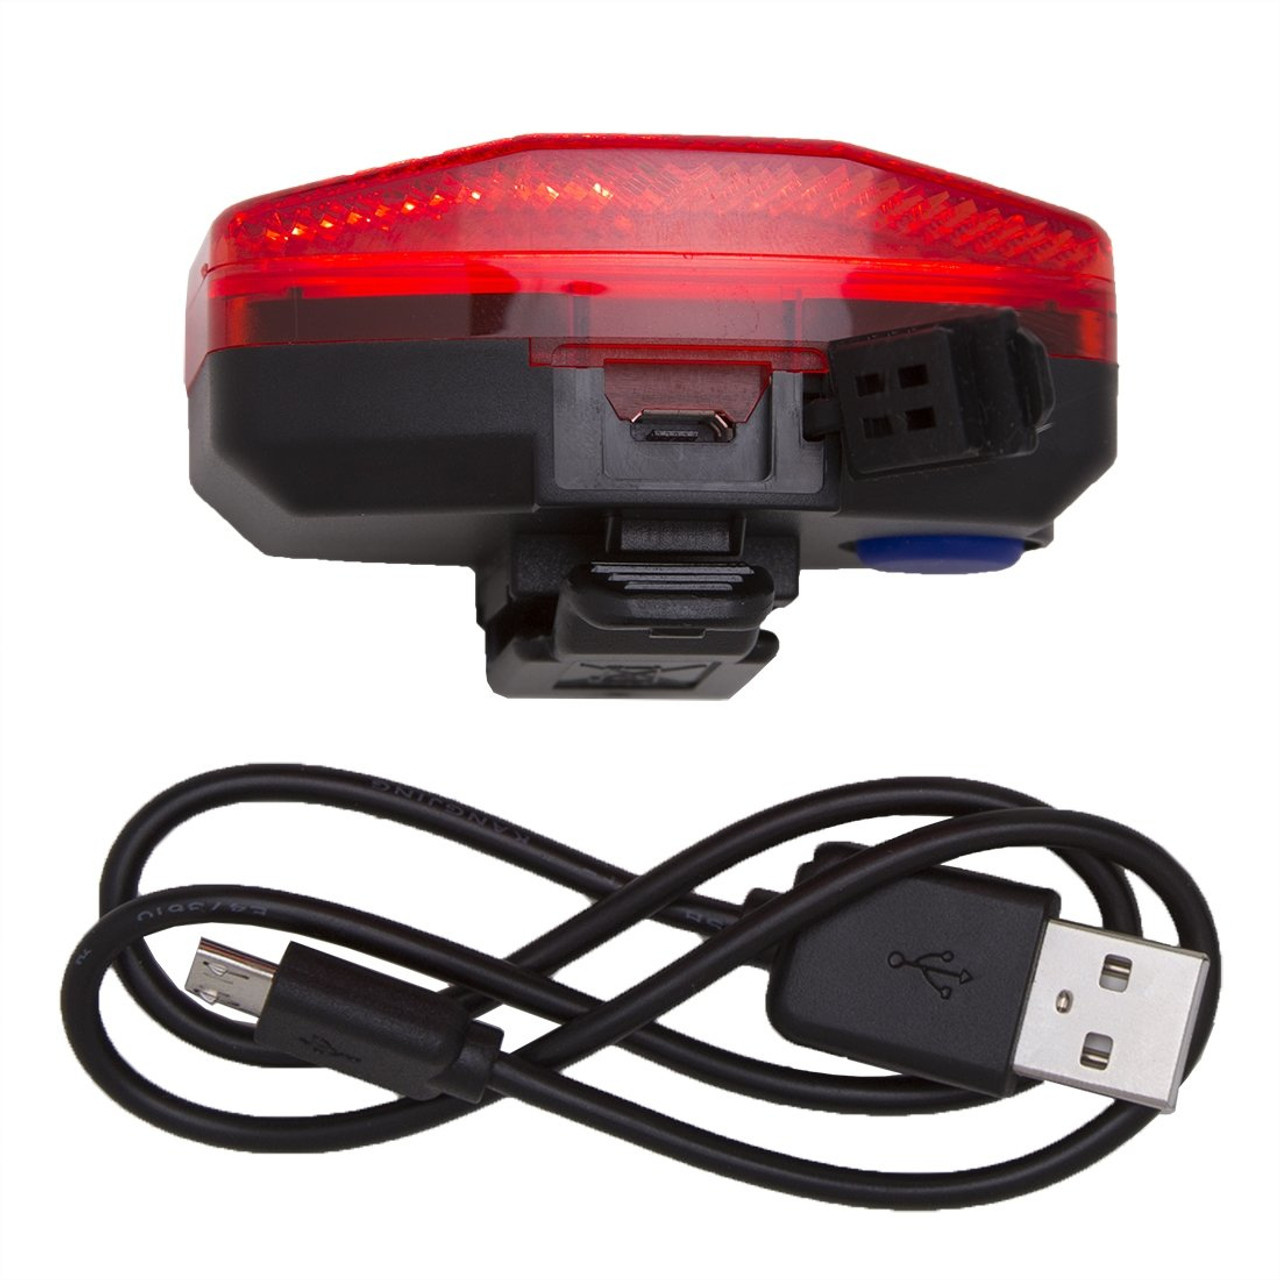 Planet Bike Grateful Red USB Taillight - 20 Lumens